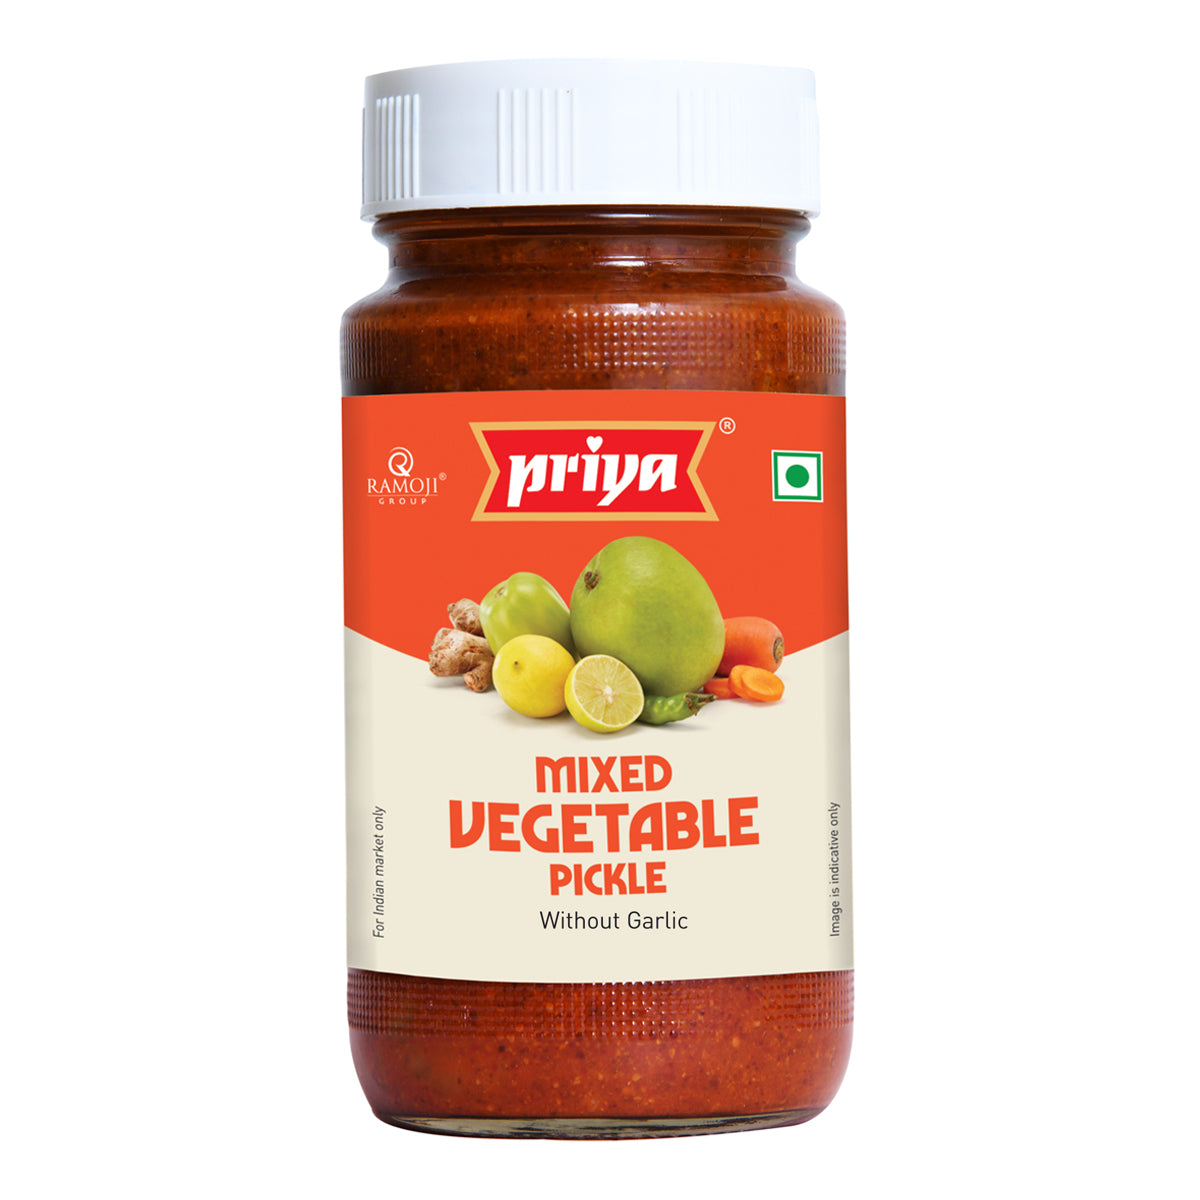 Buy priya Mixed Vegetable Pickle without garlic 